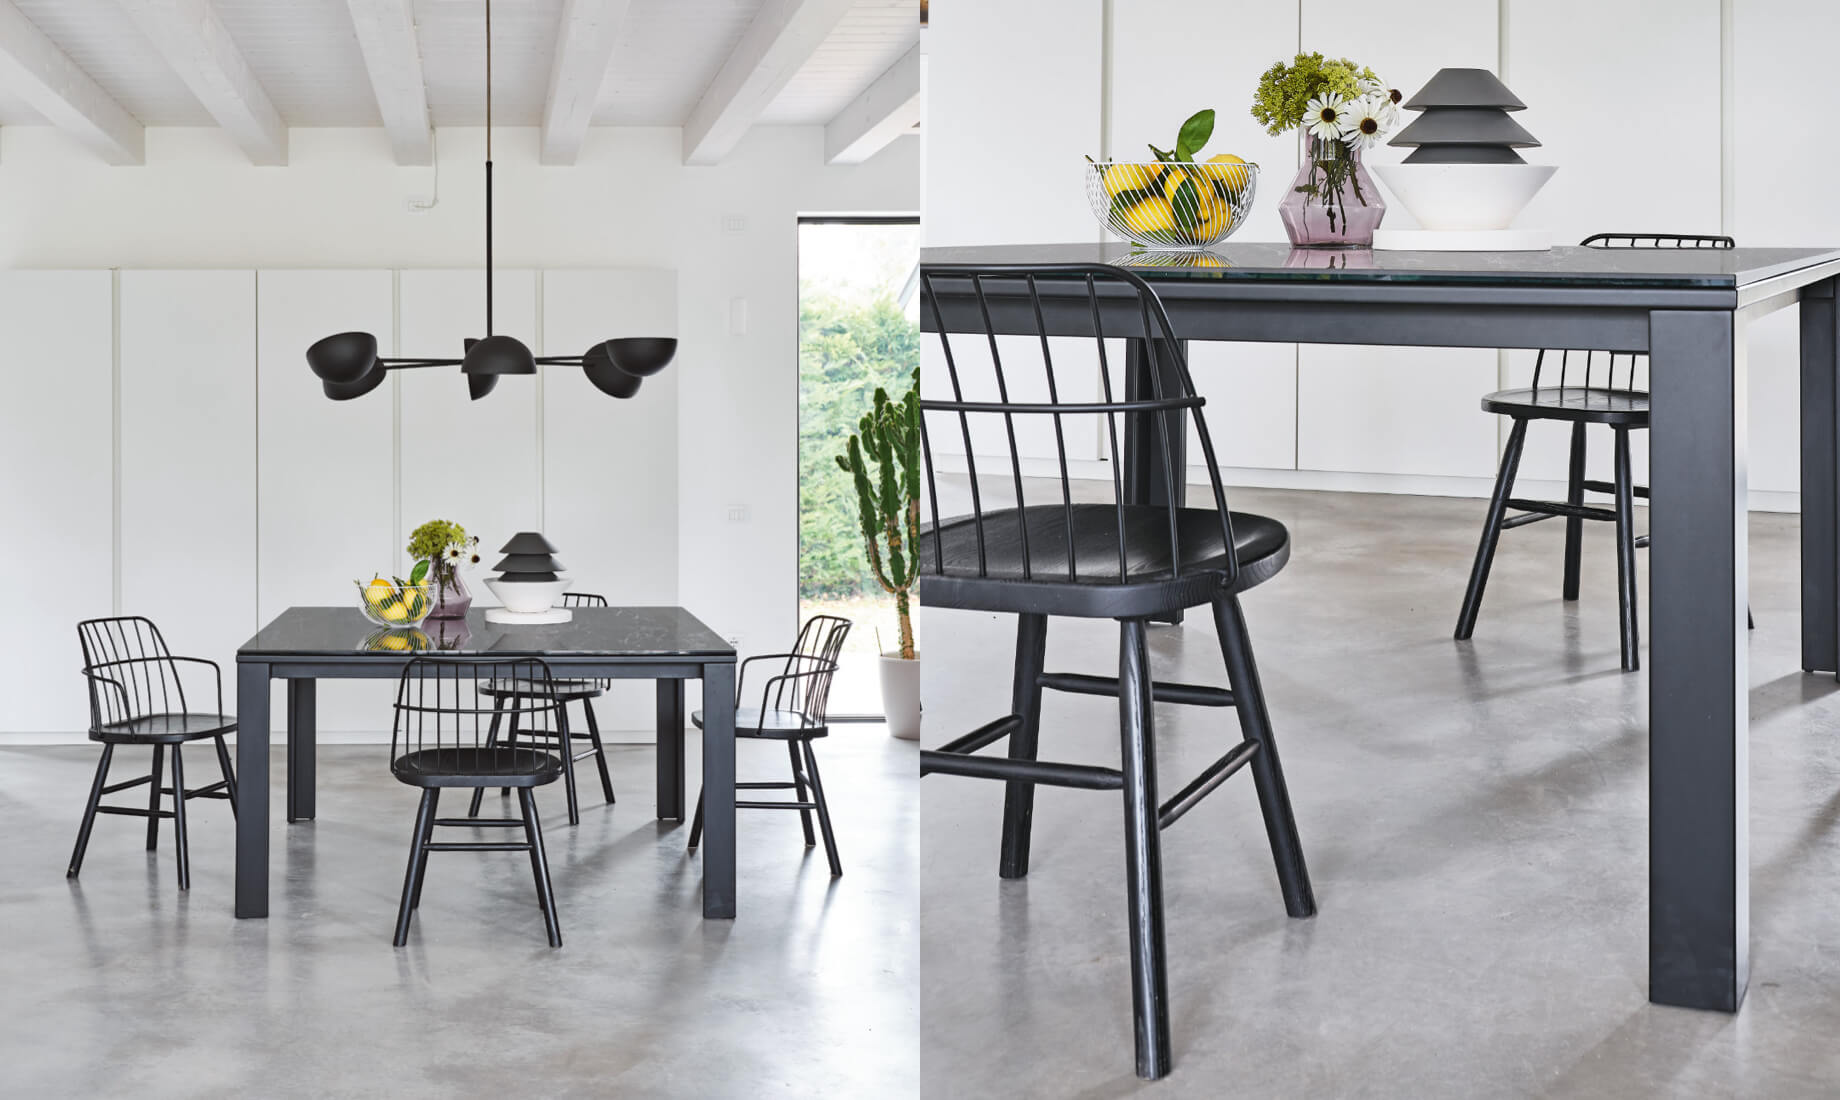 Marcopolo table, design Paolo Vernier, Strike armchair, design AtelierNanni, Charlotte suspension lamp.